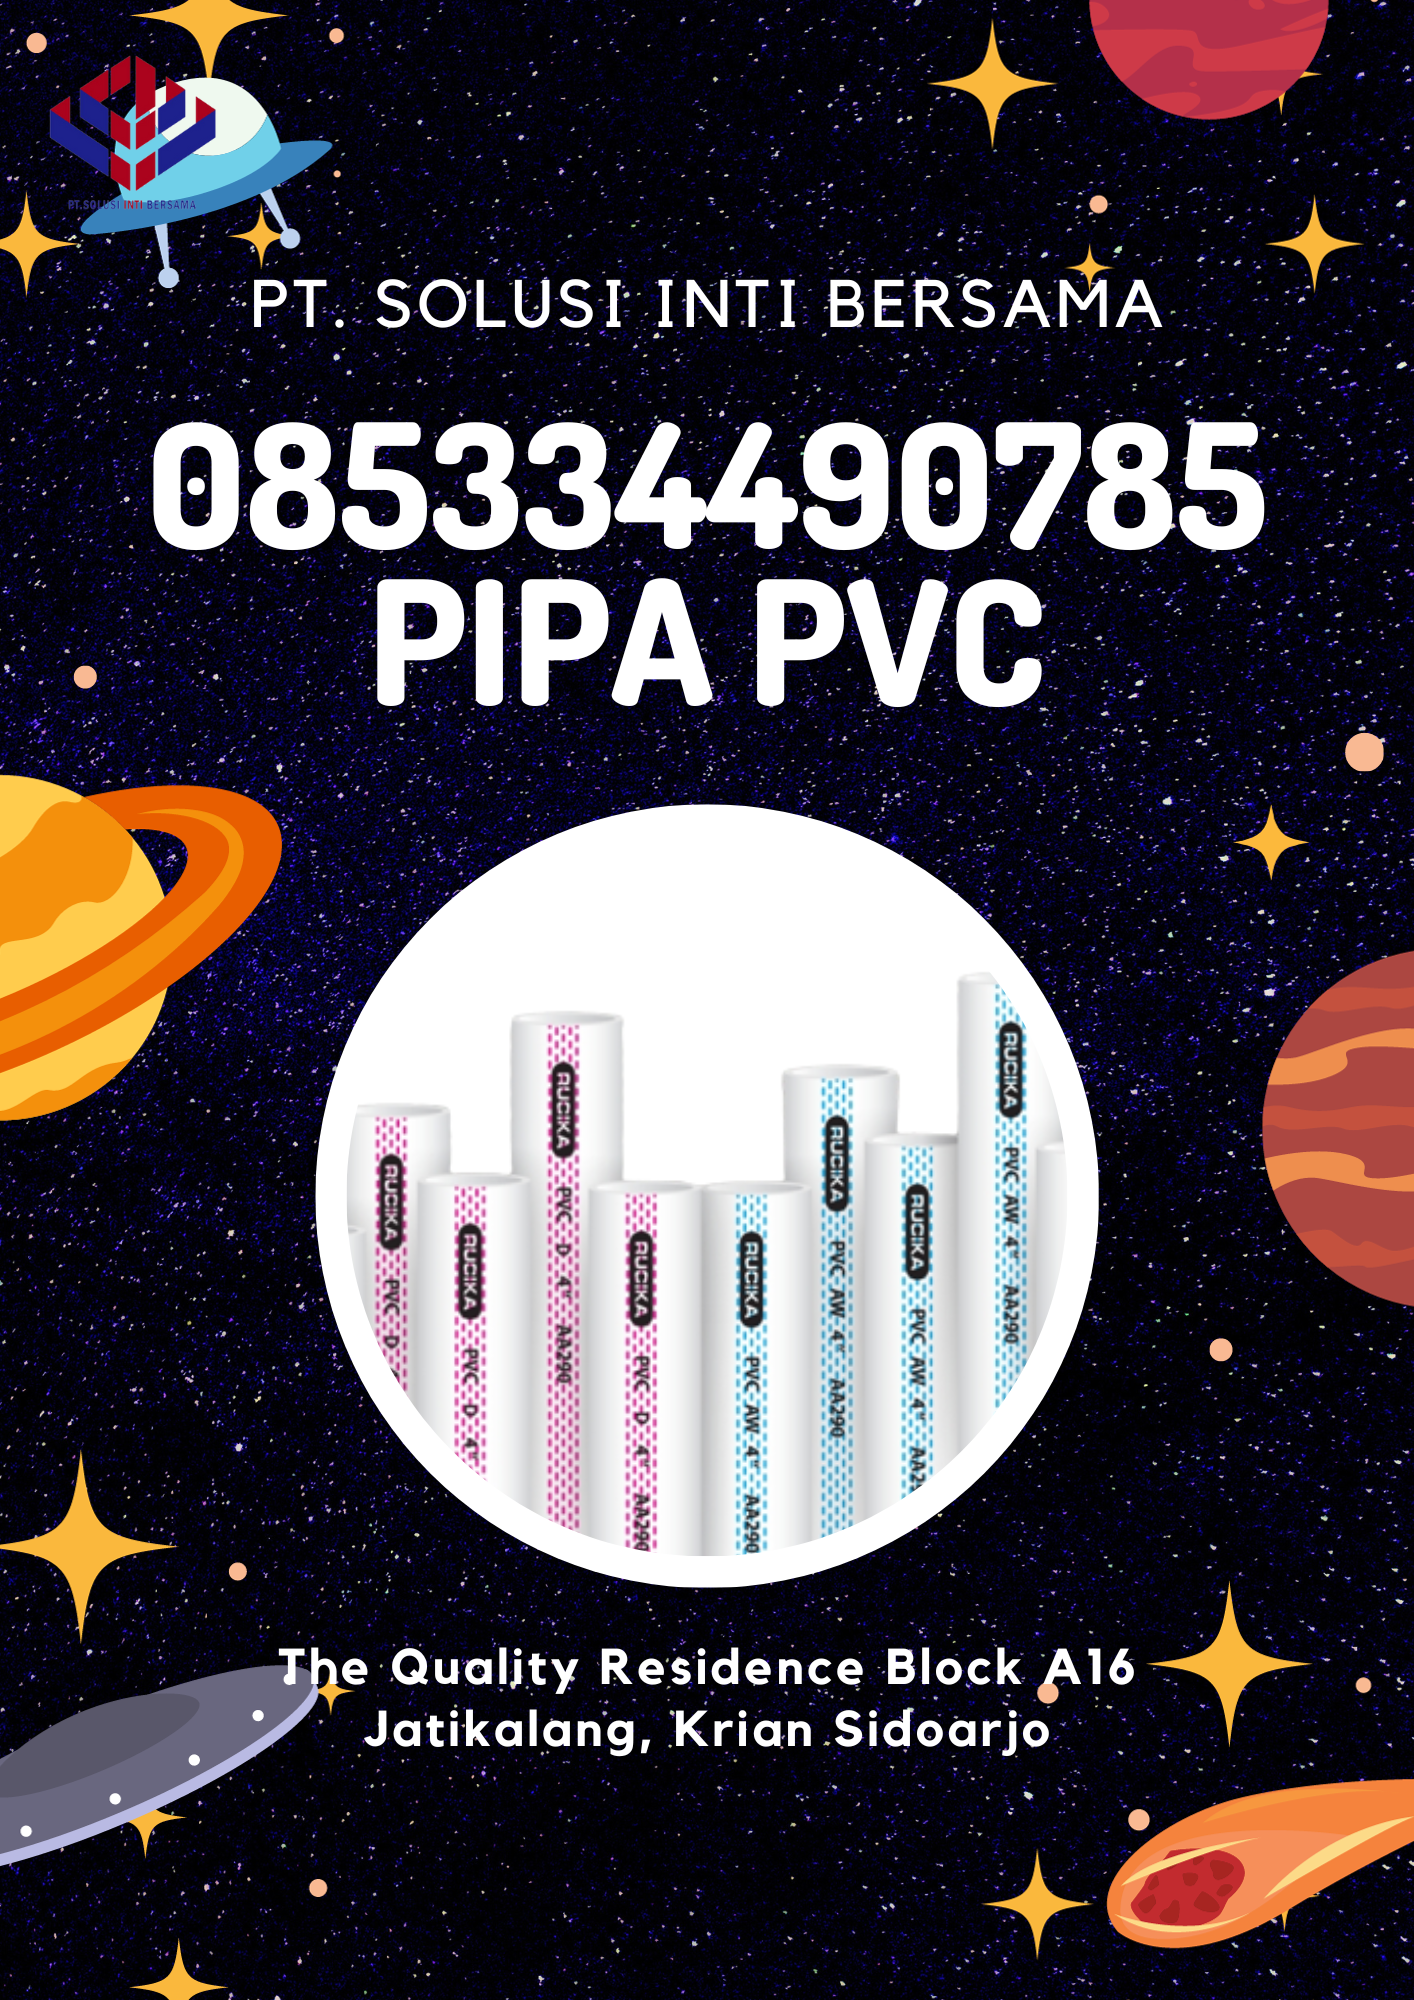 Jual-Pipa-PVC-Nusa-Tenggara-Barat